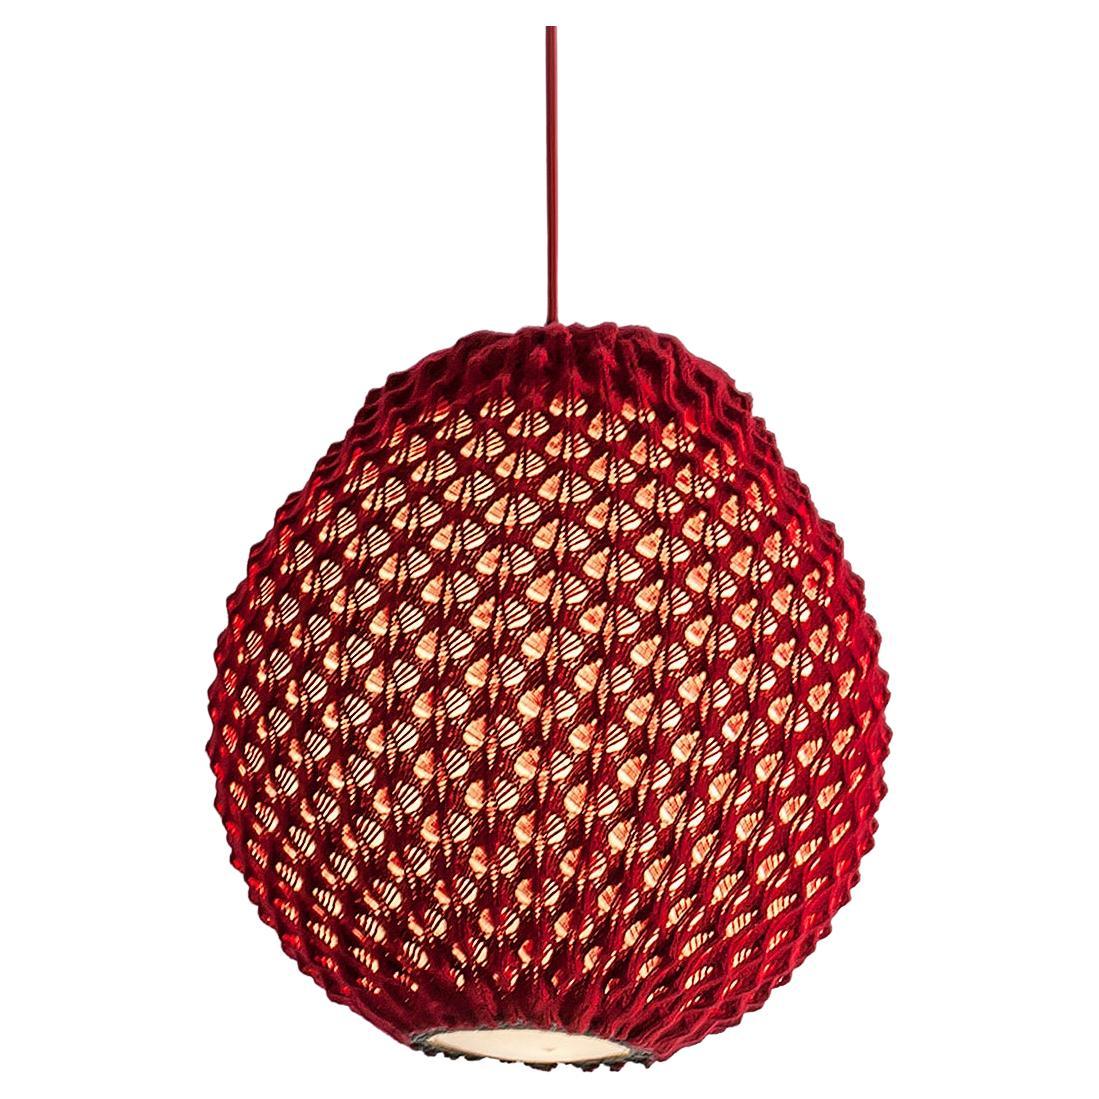 Knitted Lighting Fixture  - Pendant  - Medium size 40cm